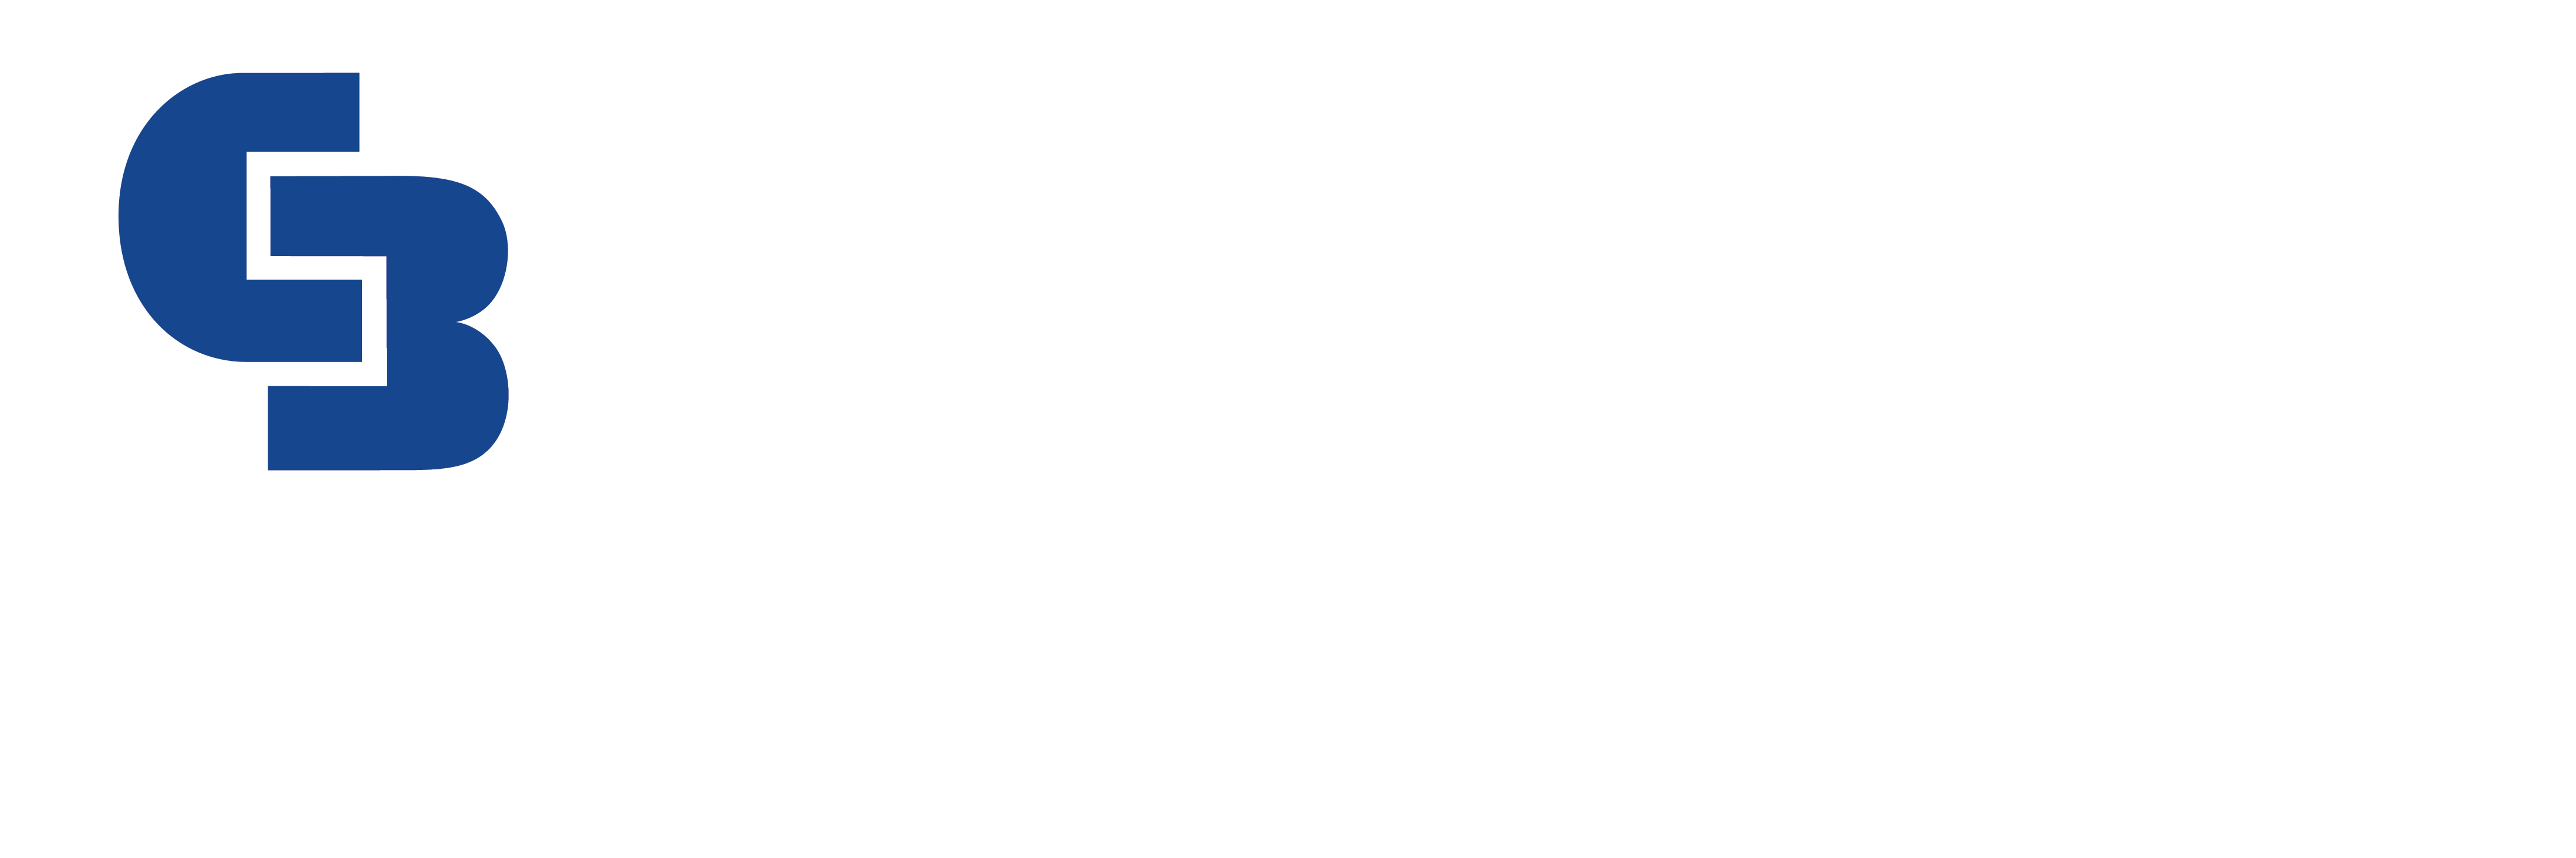 Coldwell Banker Commercial Elite